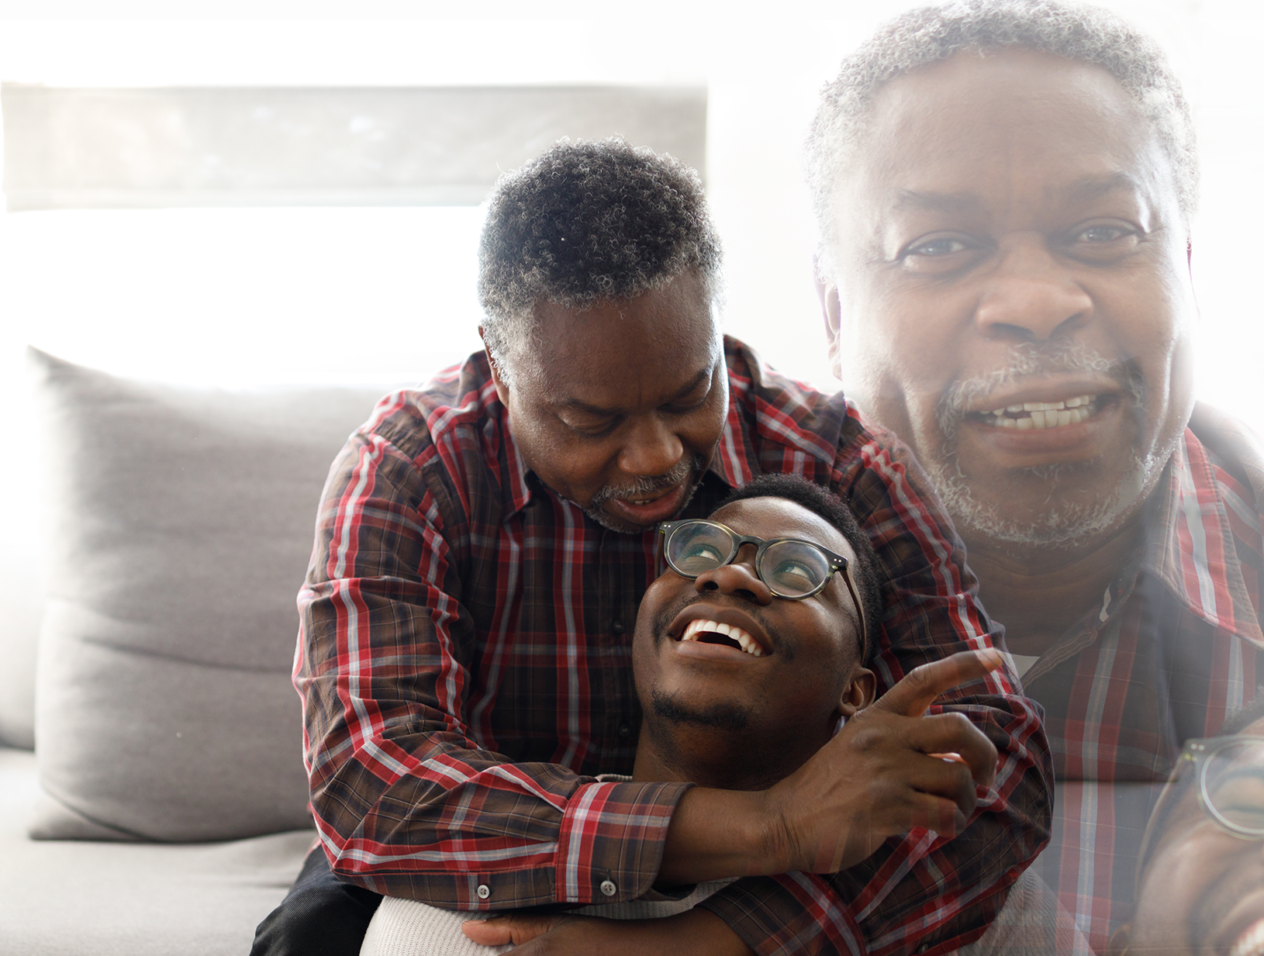 Man hugging his grandson and smiling